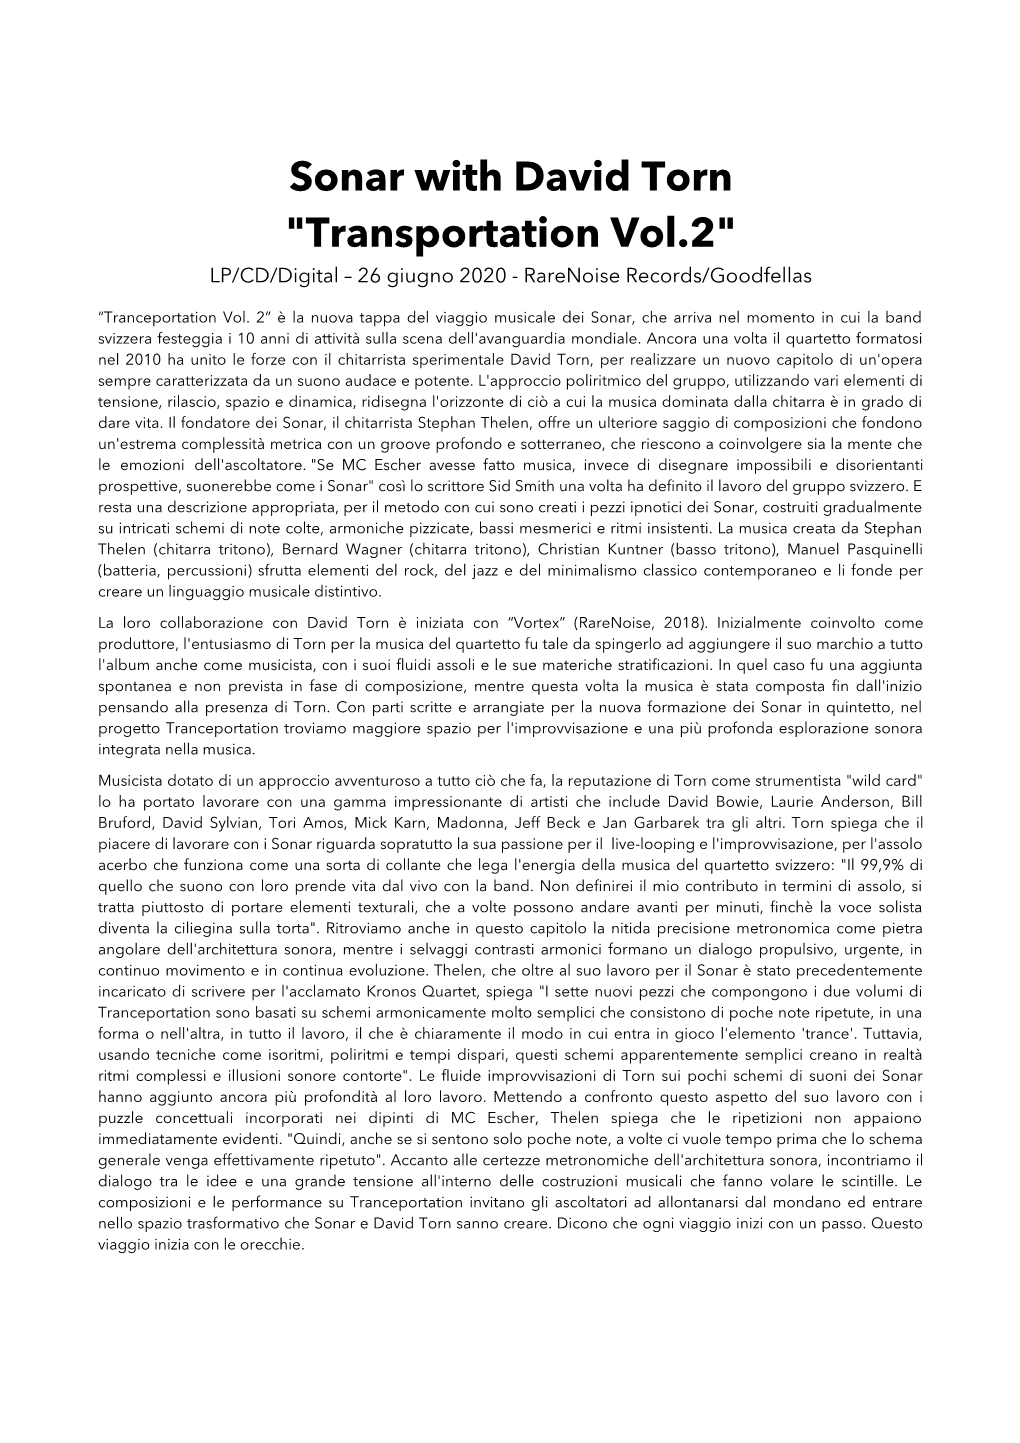 Sonar with David Torn "Transportation Vol.2" LP/CD/Digital – 26 Giugno 2020 - Rarenoise Records/Goodfellas